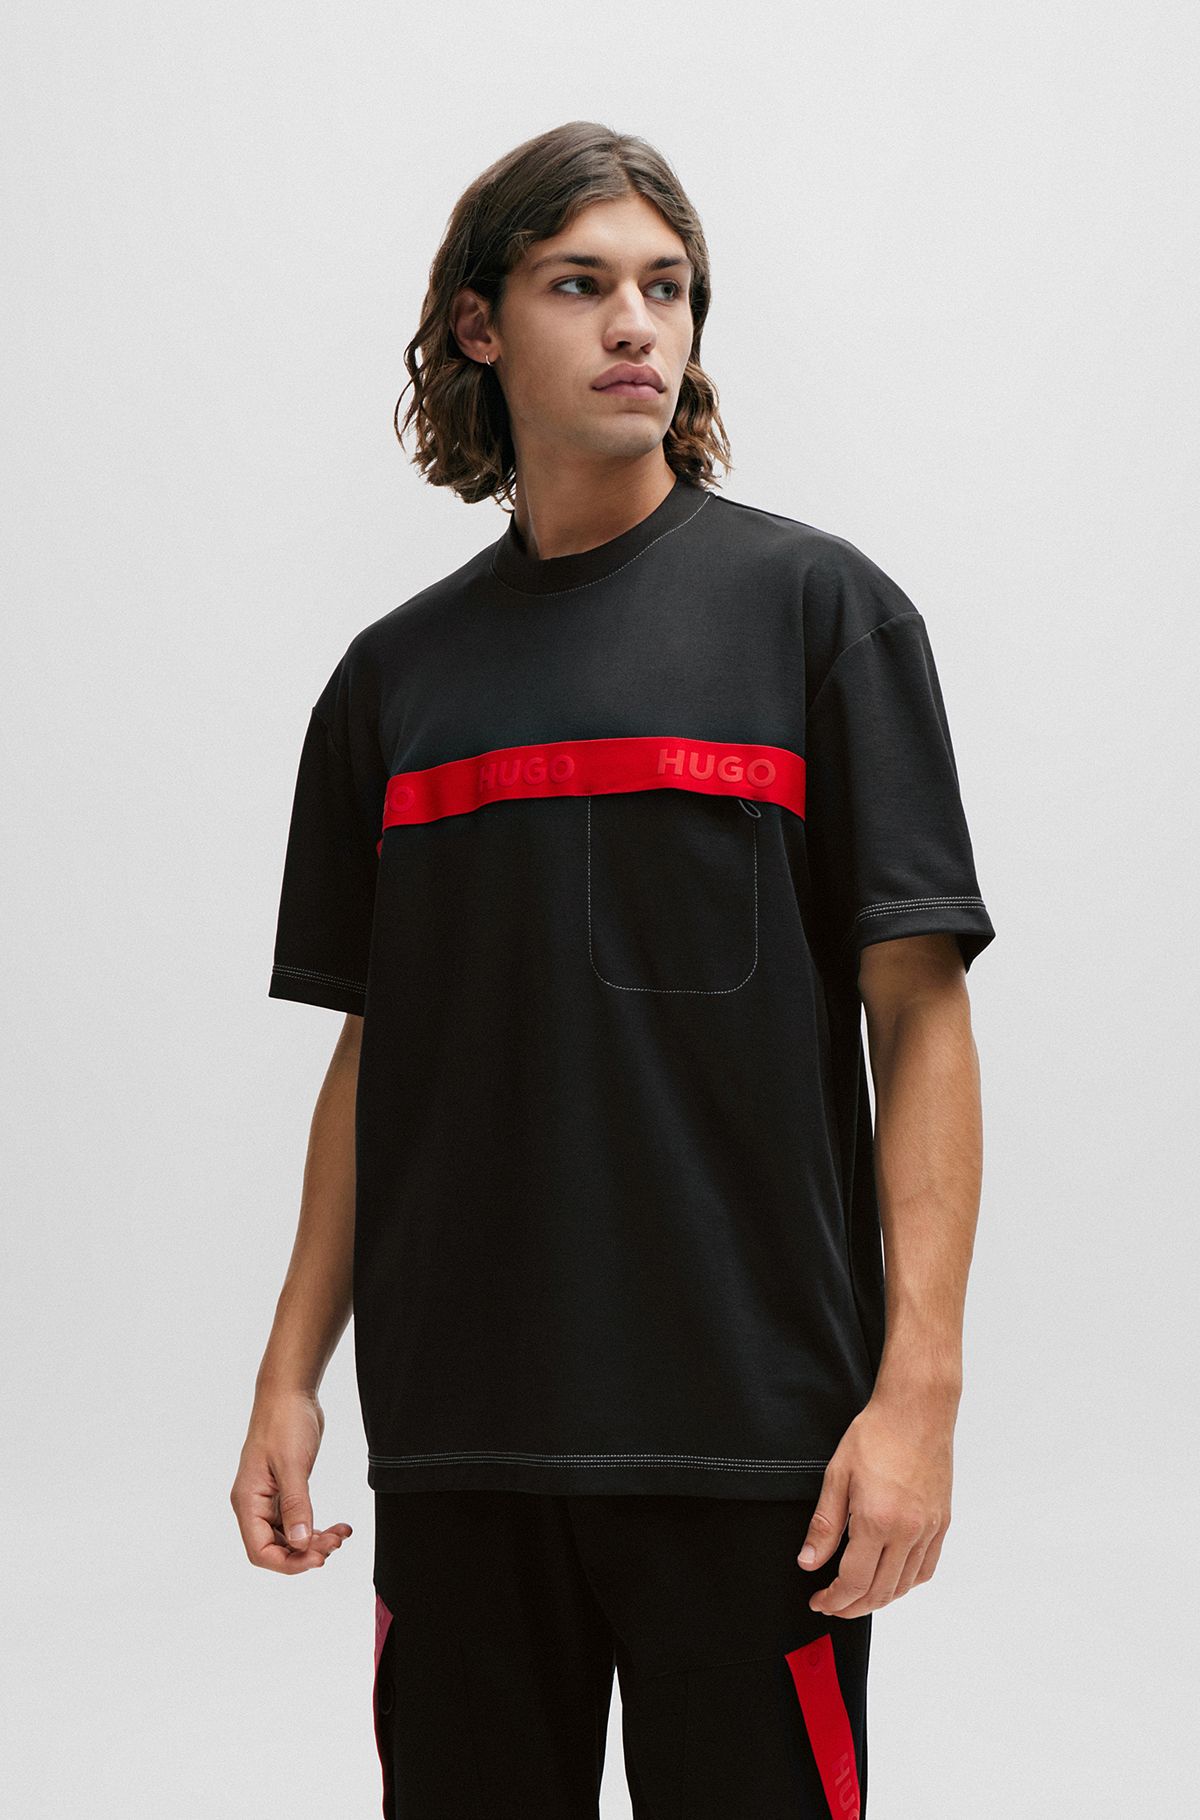 HUGO BOSS Print T-Shirts – Elaborate designs | Men